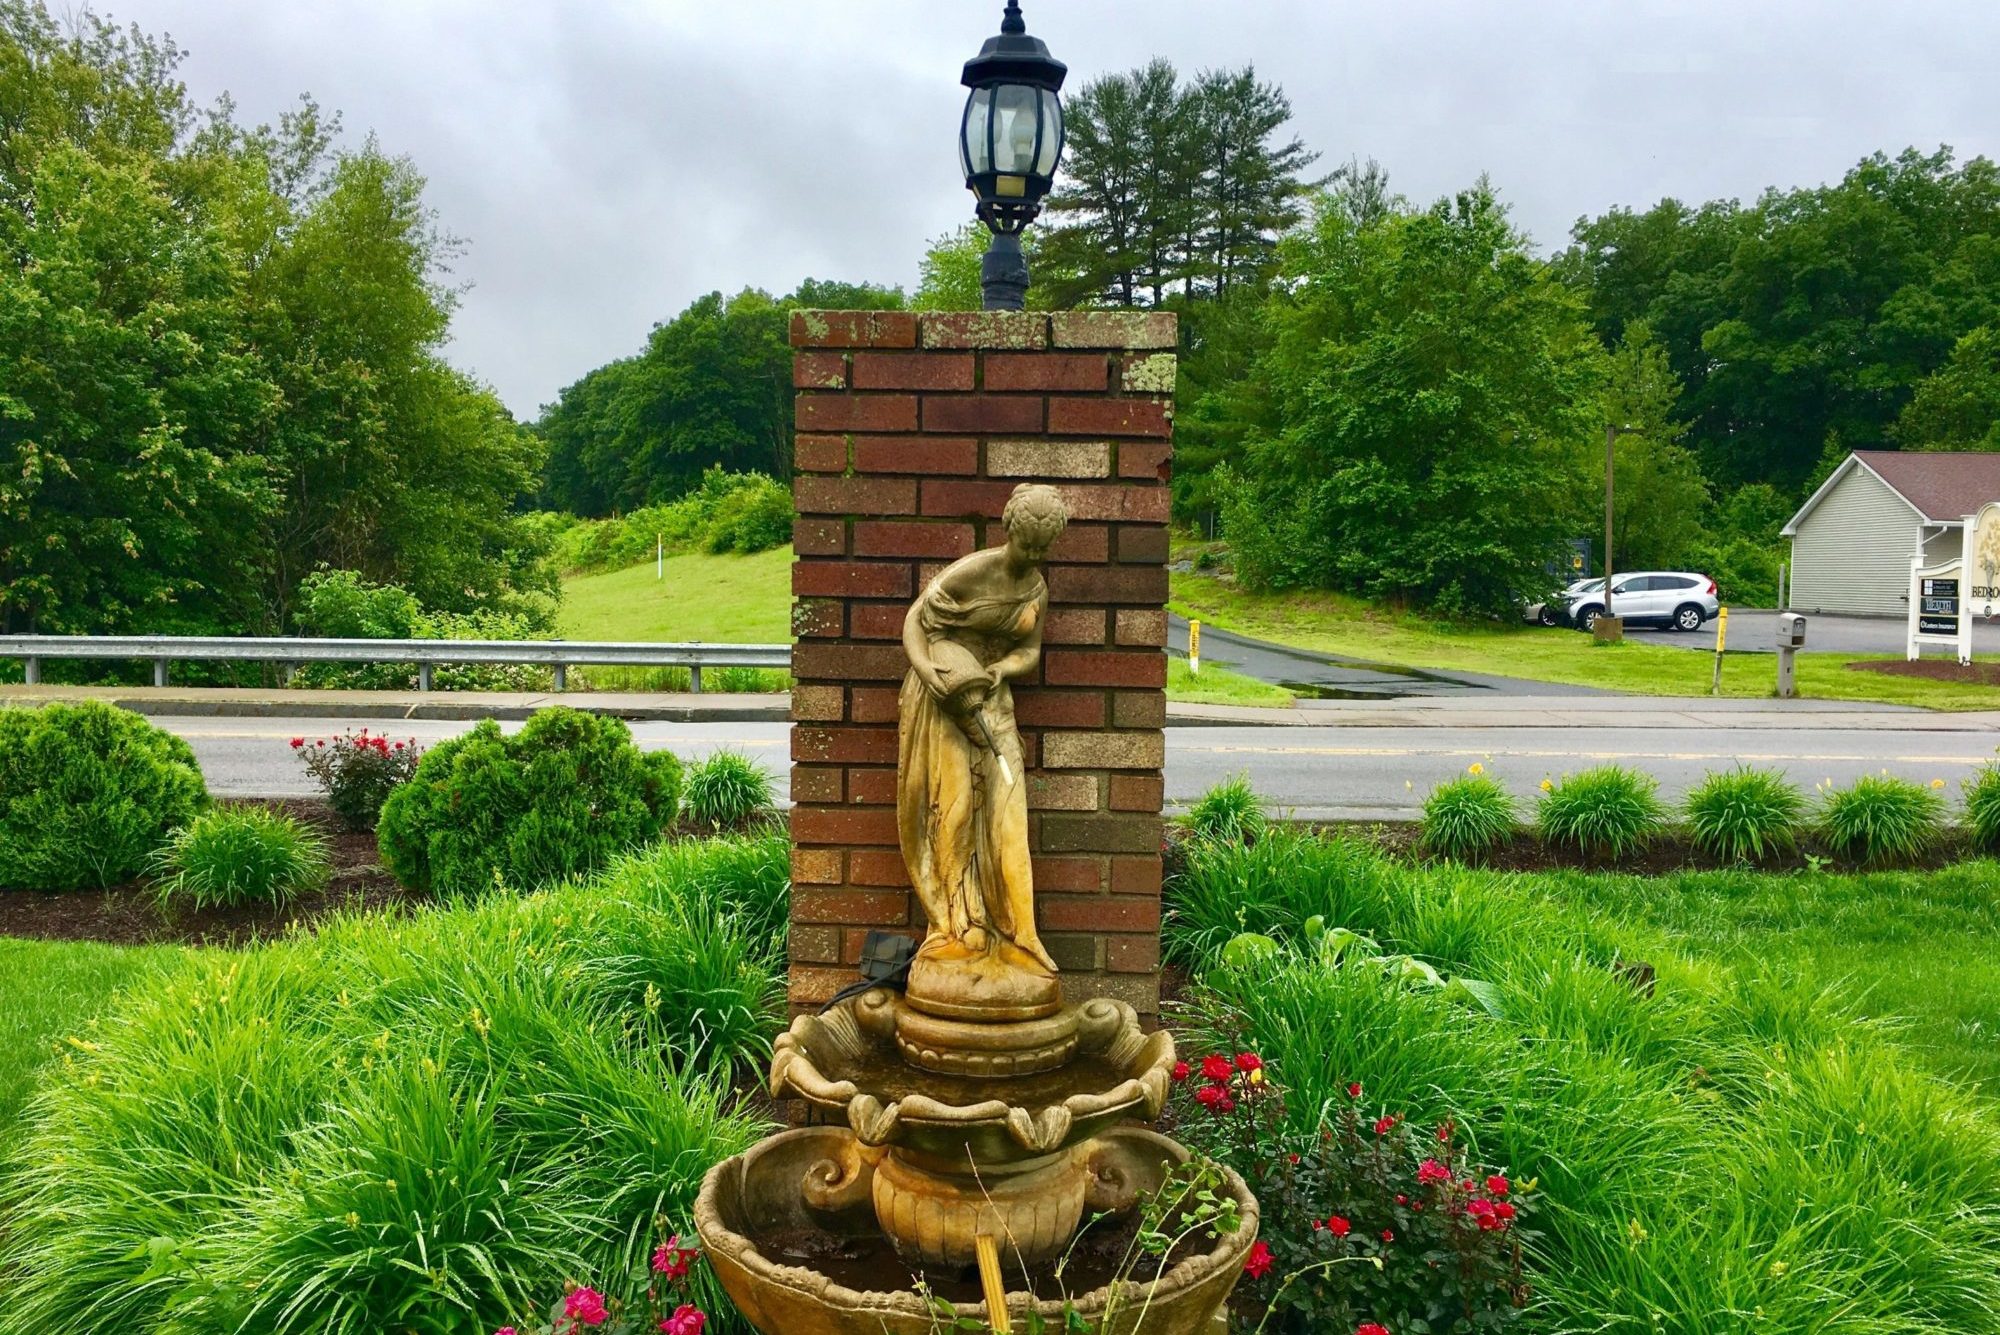 Fountain, flowering shrubs, shrubs, grassy area, brick post with lamp